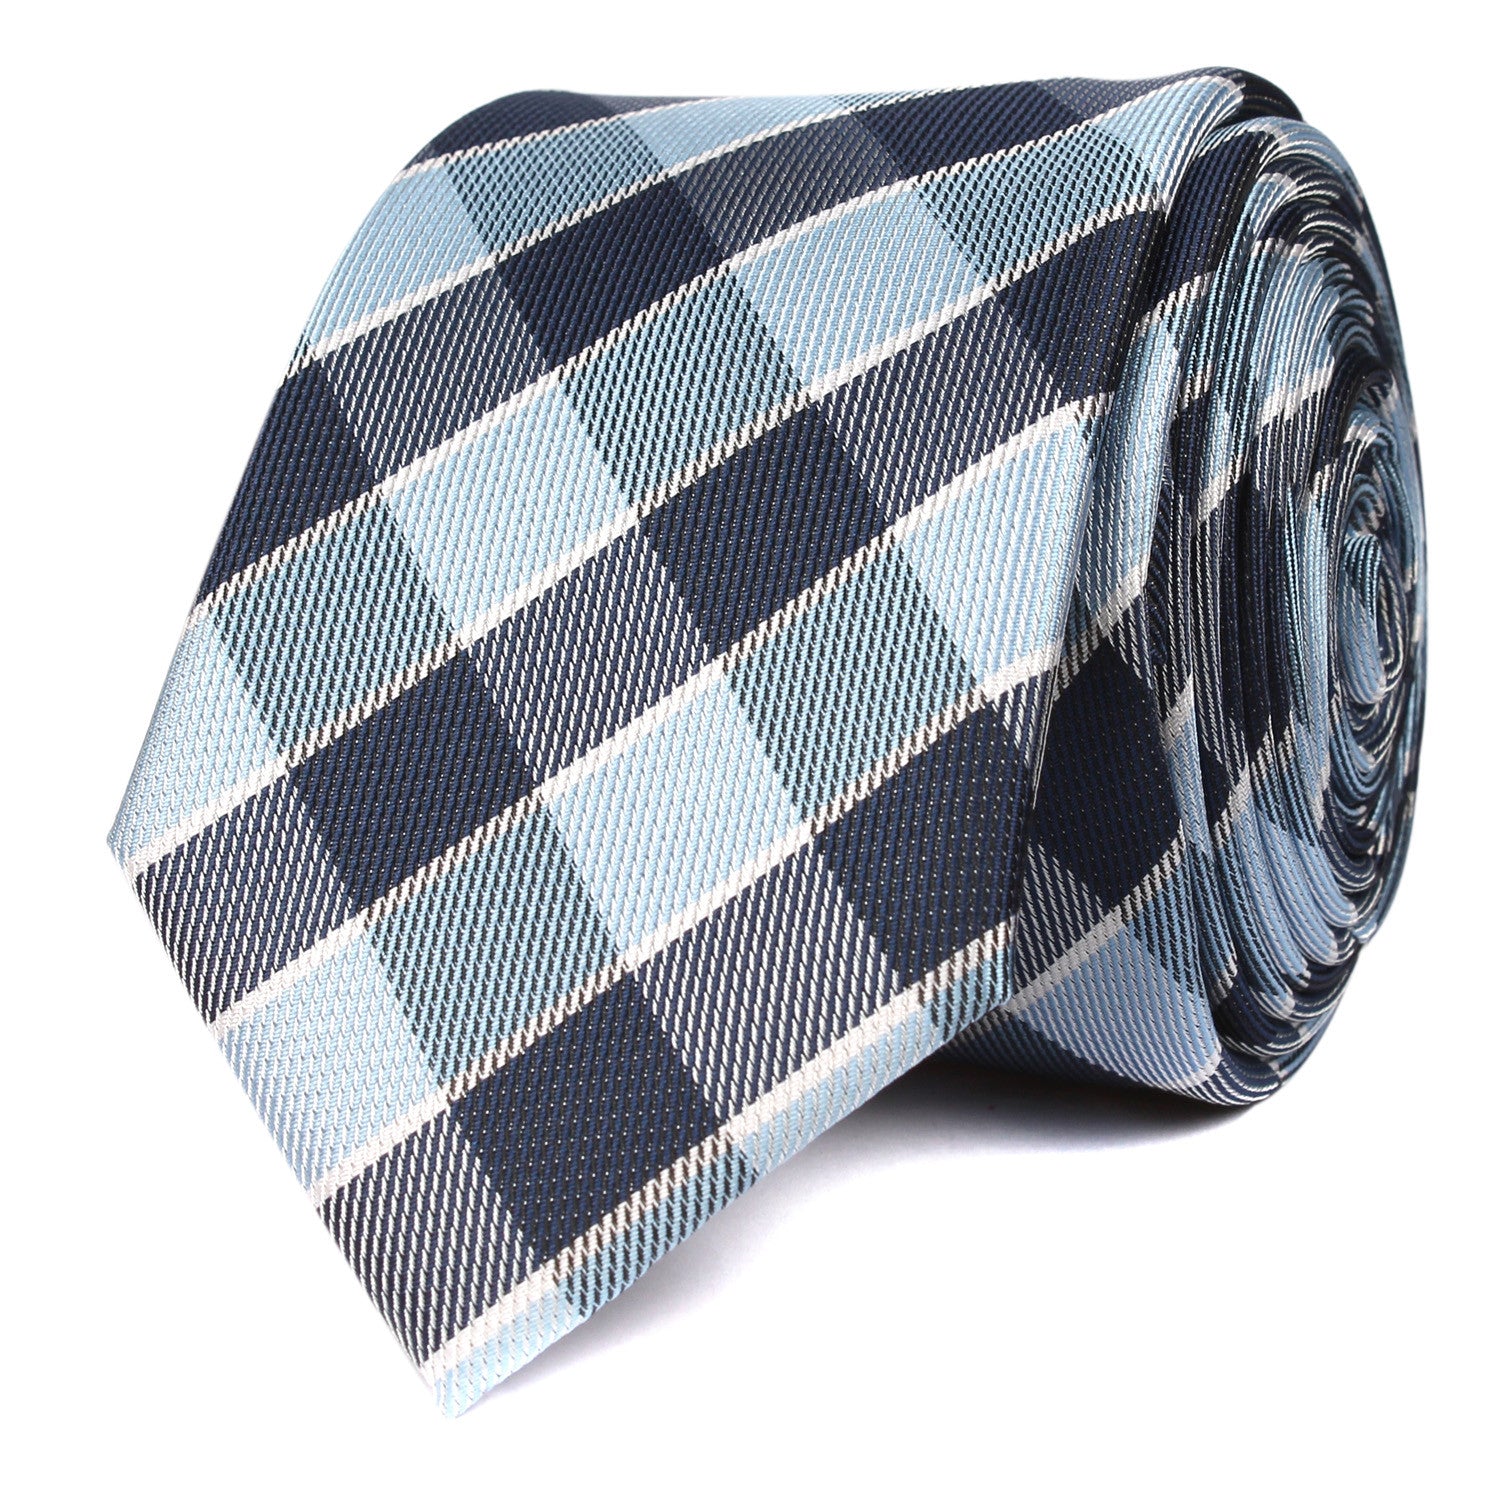 Light and Navy Blue Checkered Skinny Tie OTAA roll